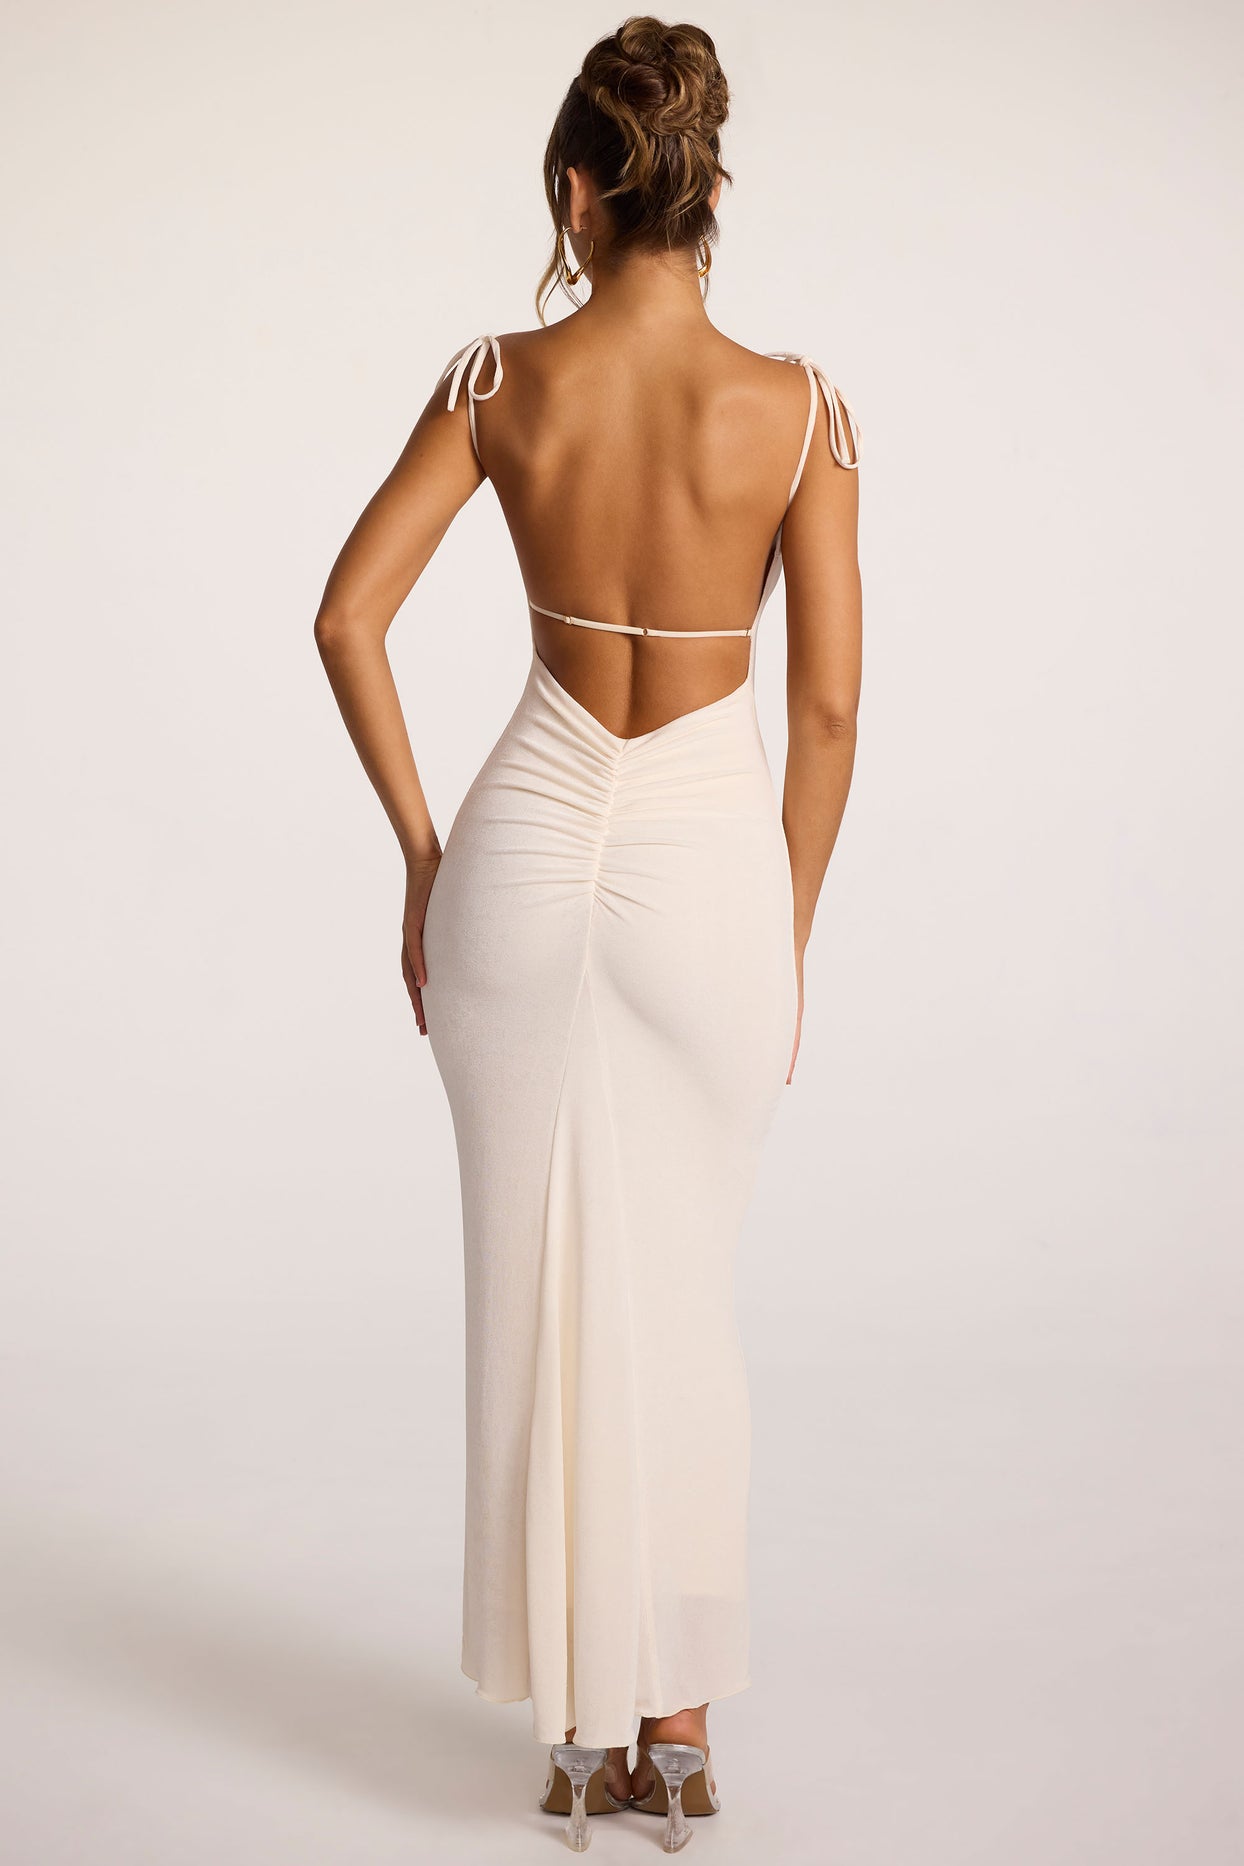 Noelia Textured Jersey Open Back Maxi Dress in Ivory